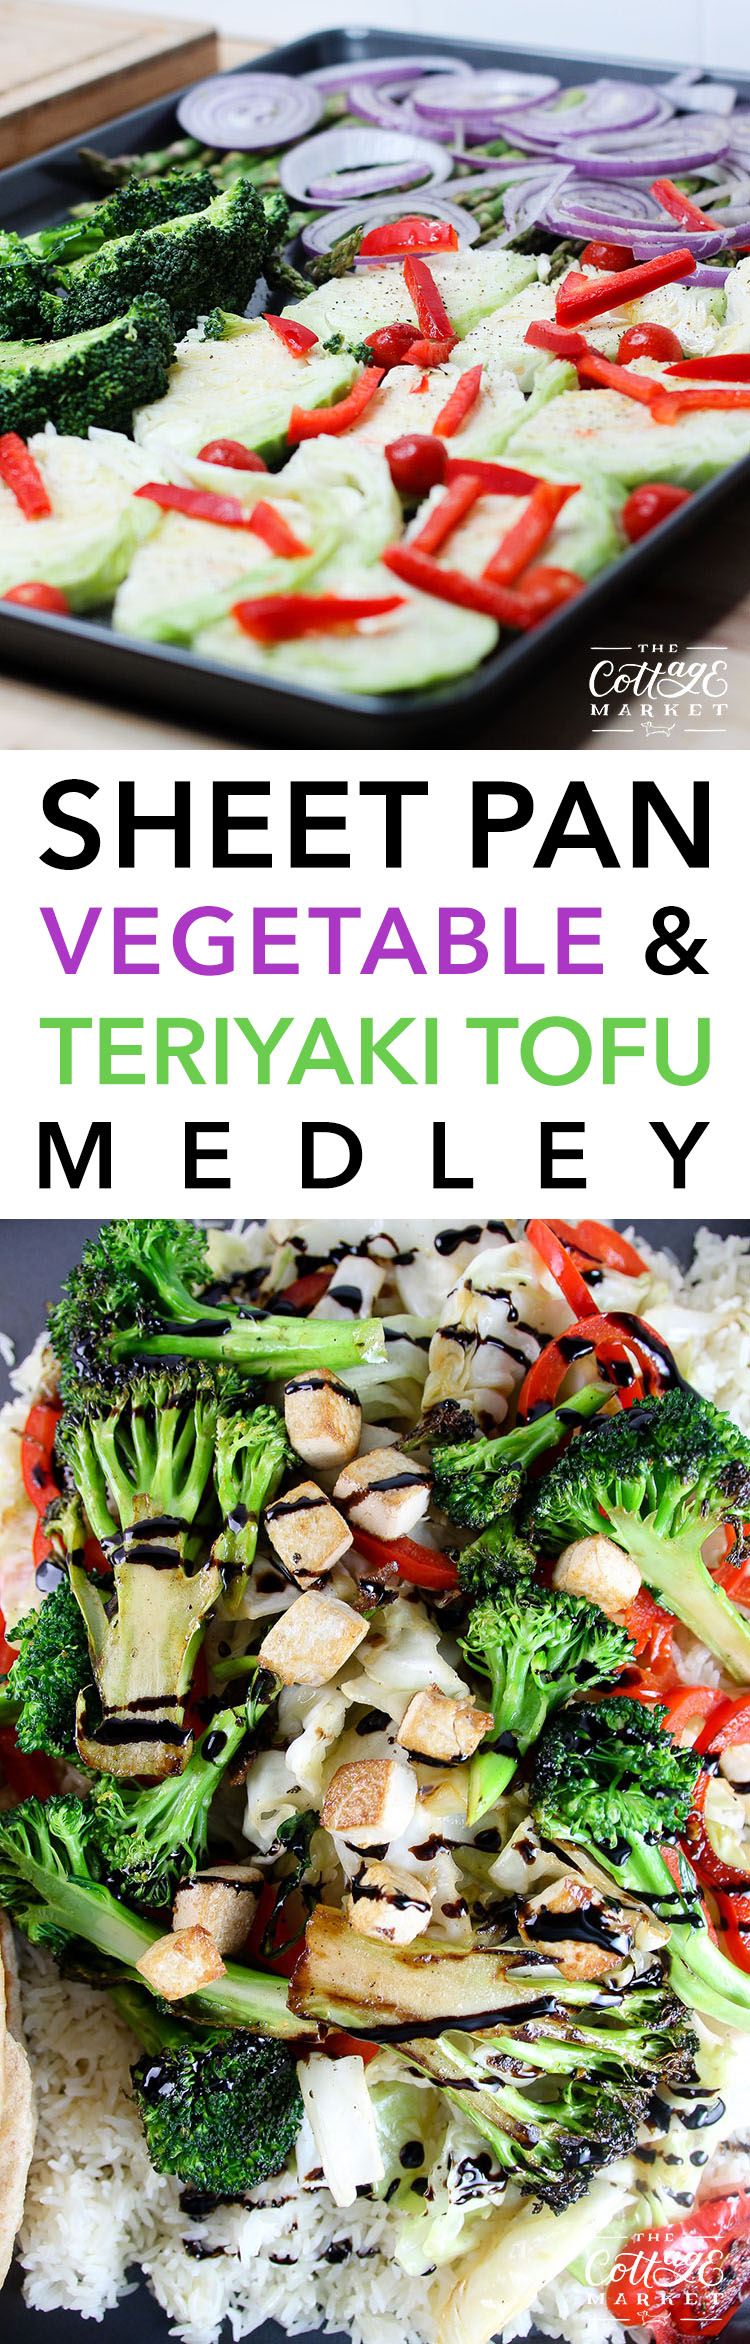 http://thecottagemarket.com/wp-content/uploads/2017/04/Vegetable-Medley-w-Marinated-Tofu-Over-Ginger-Jasmine-Rice-Sheet-Pan-Meal-TOWER-1.jpg